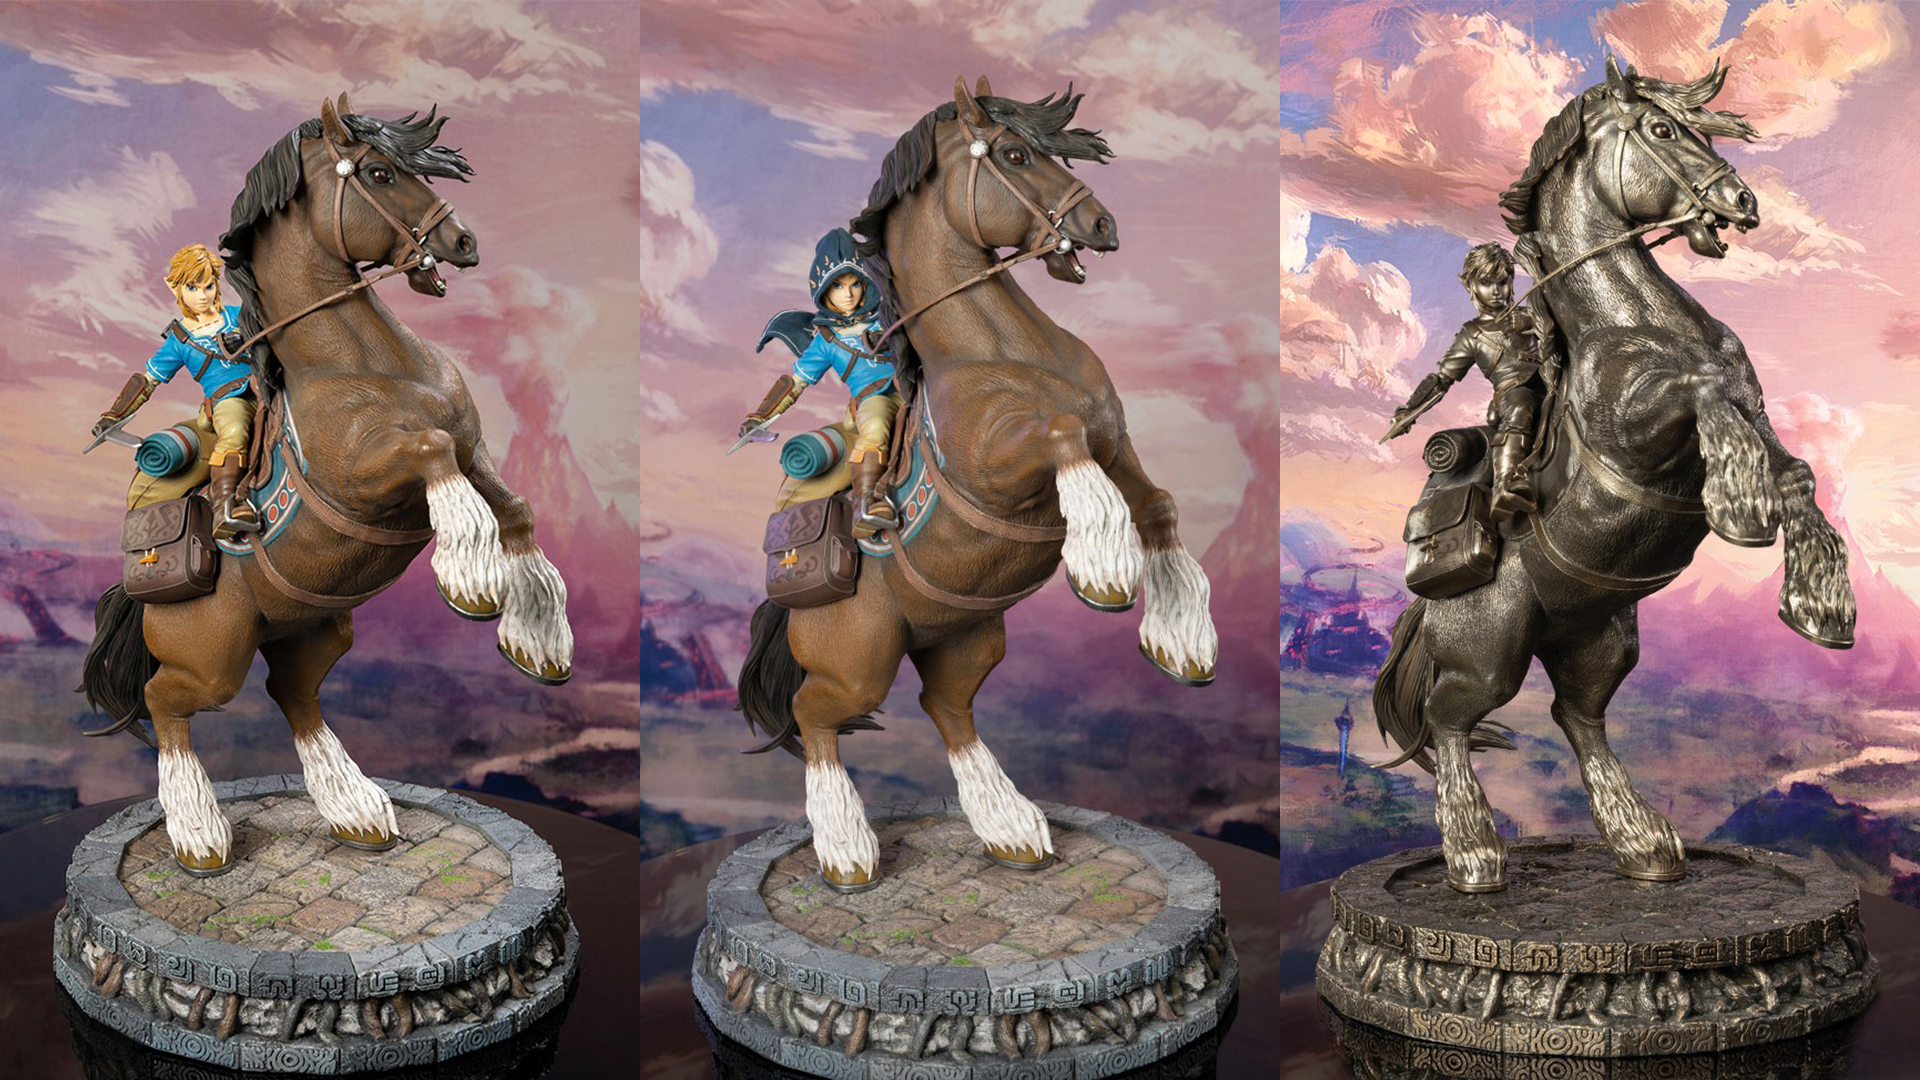 First 4 Figures - Zelda - The Legend of Zelda: Breath of The Wild - Link on  Horseback (Standard Edition) - Figurine Collector EURL